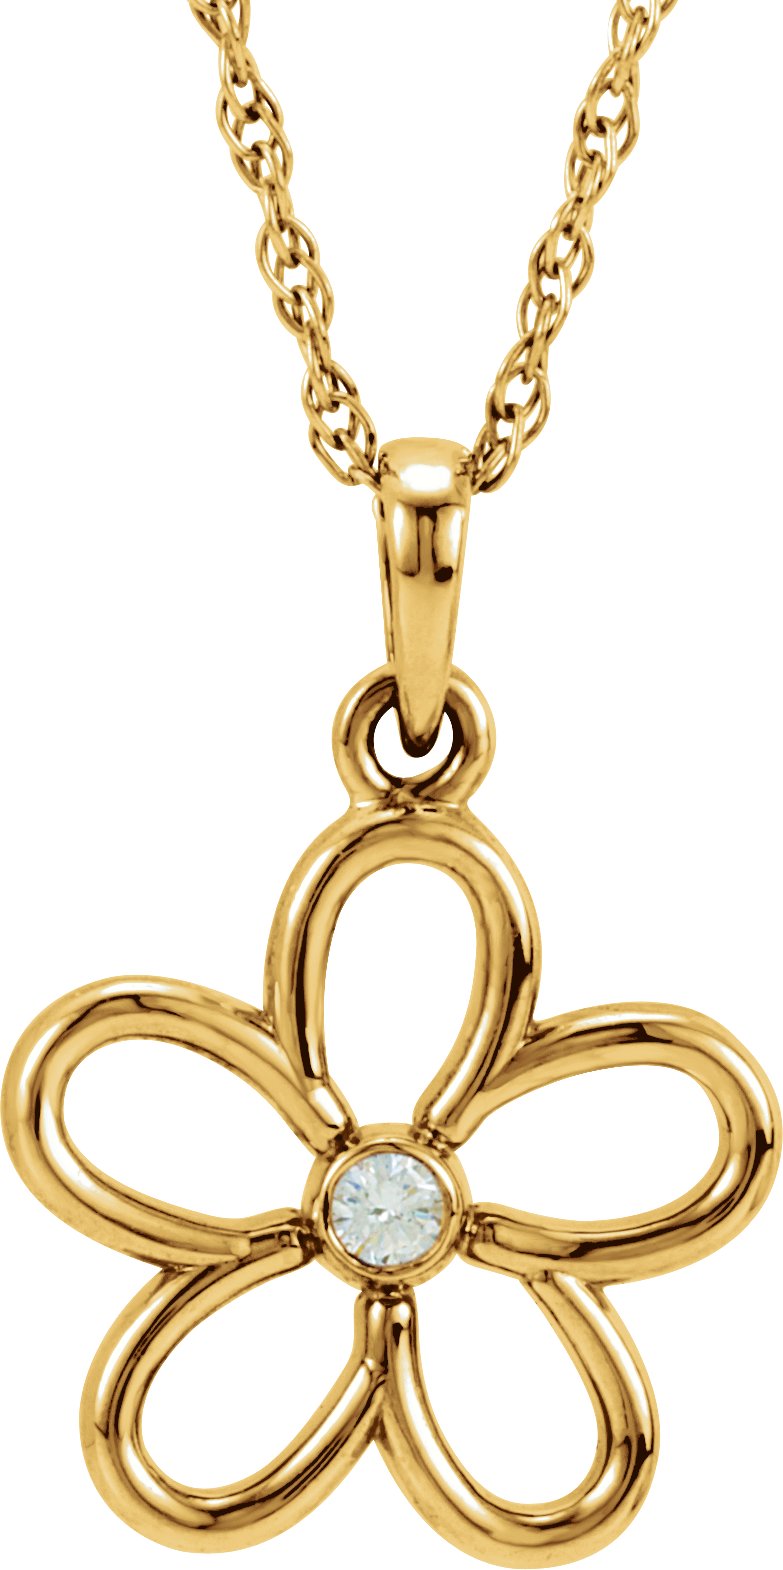 14K Yellow .03 CTW Diamond Flower 18 inch Necklace Ref 5056518